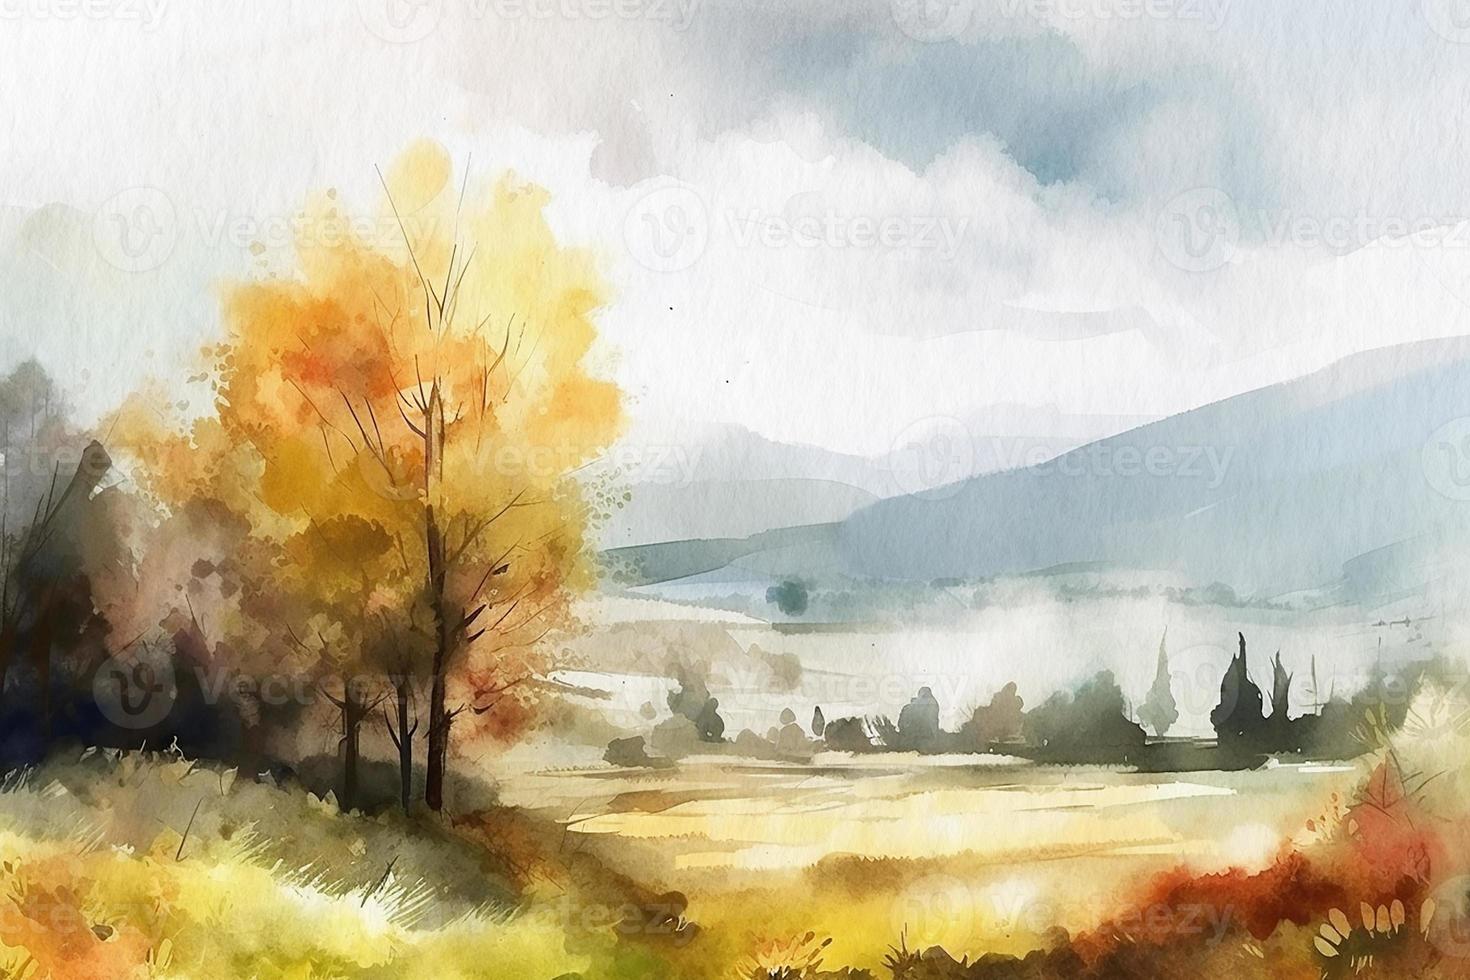 Herbst Landschaft gemalt mit Aquarelle auf texturiert Papier. Digital Aquarell Gemälde foto